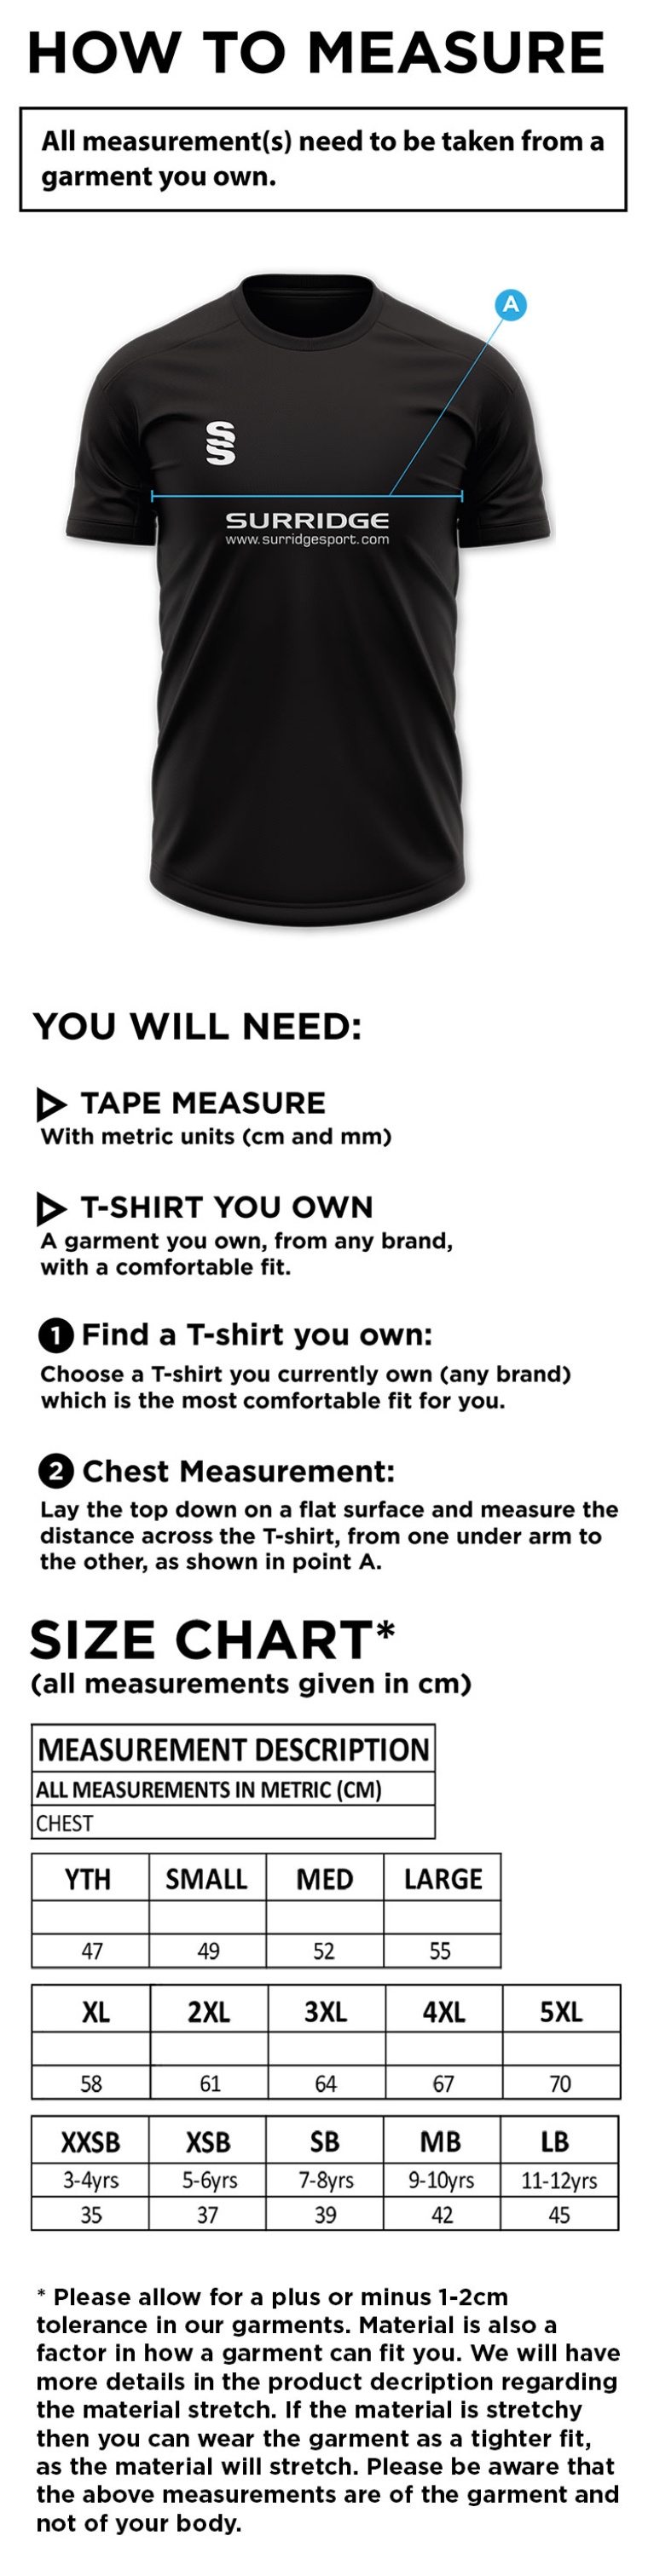 HSBC - Dual Polo Shirt - Size Guide